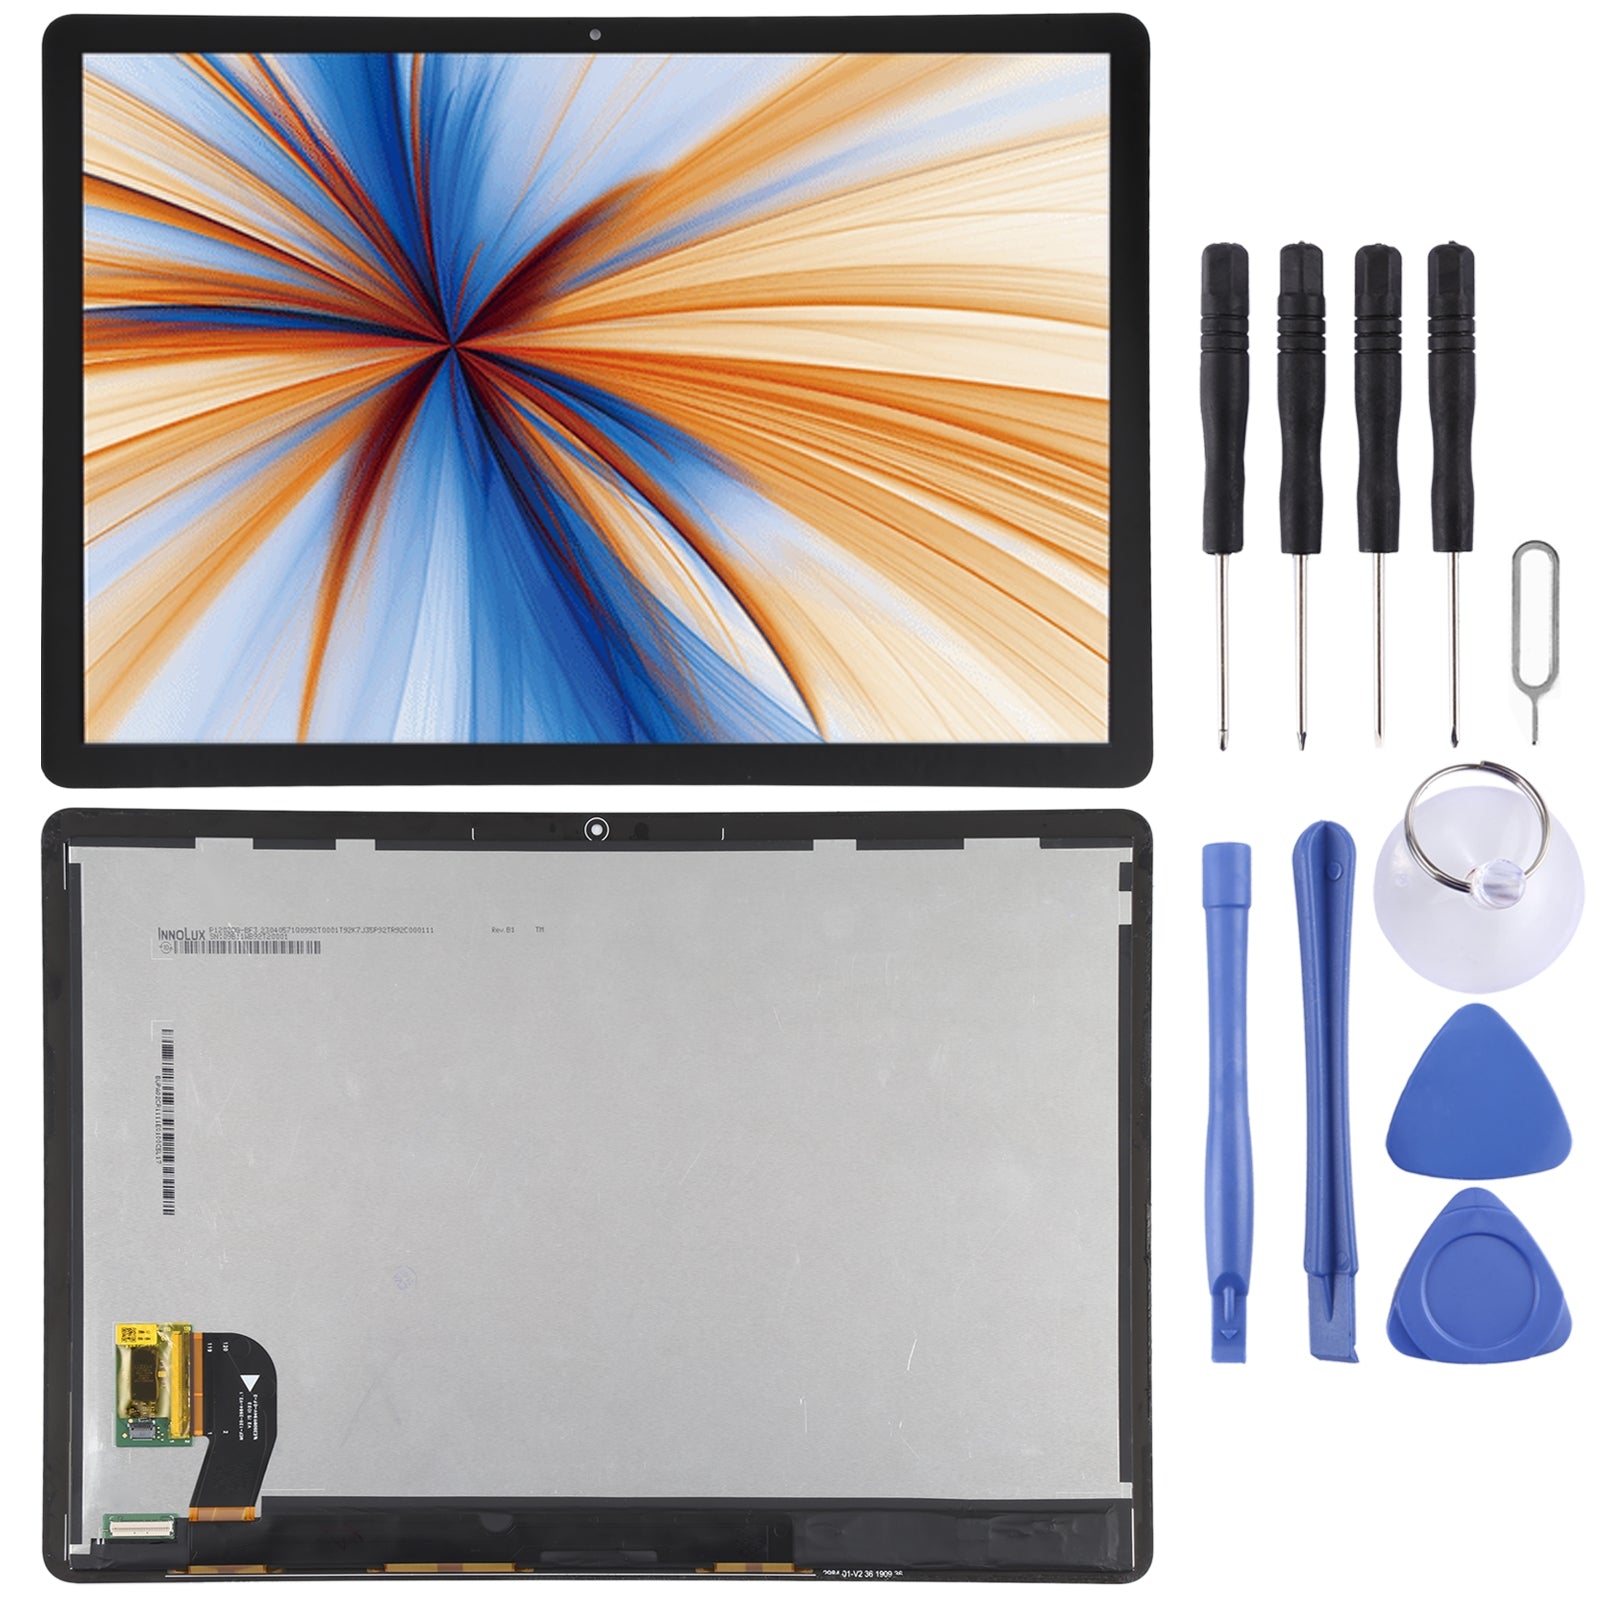 Pantalla LCD + Tactil Digitalizador Huawei MateBook E (2019) Pak-al09 W09 Negro